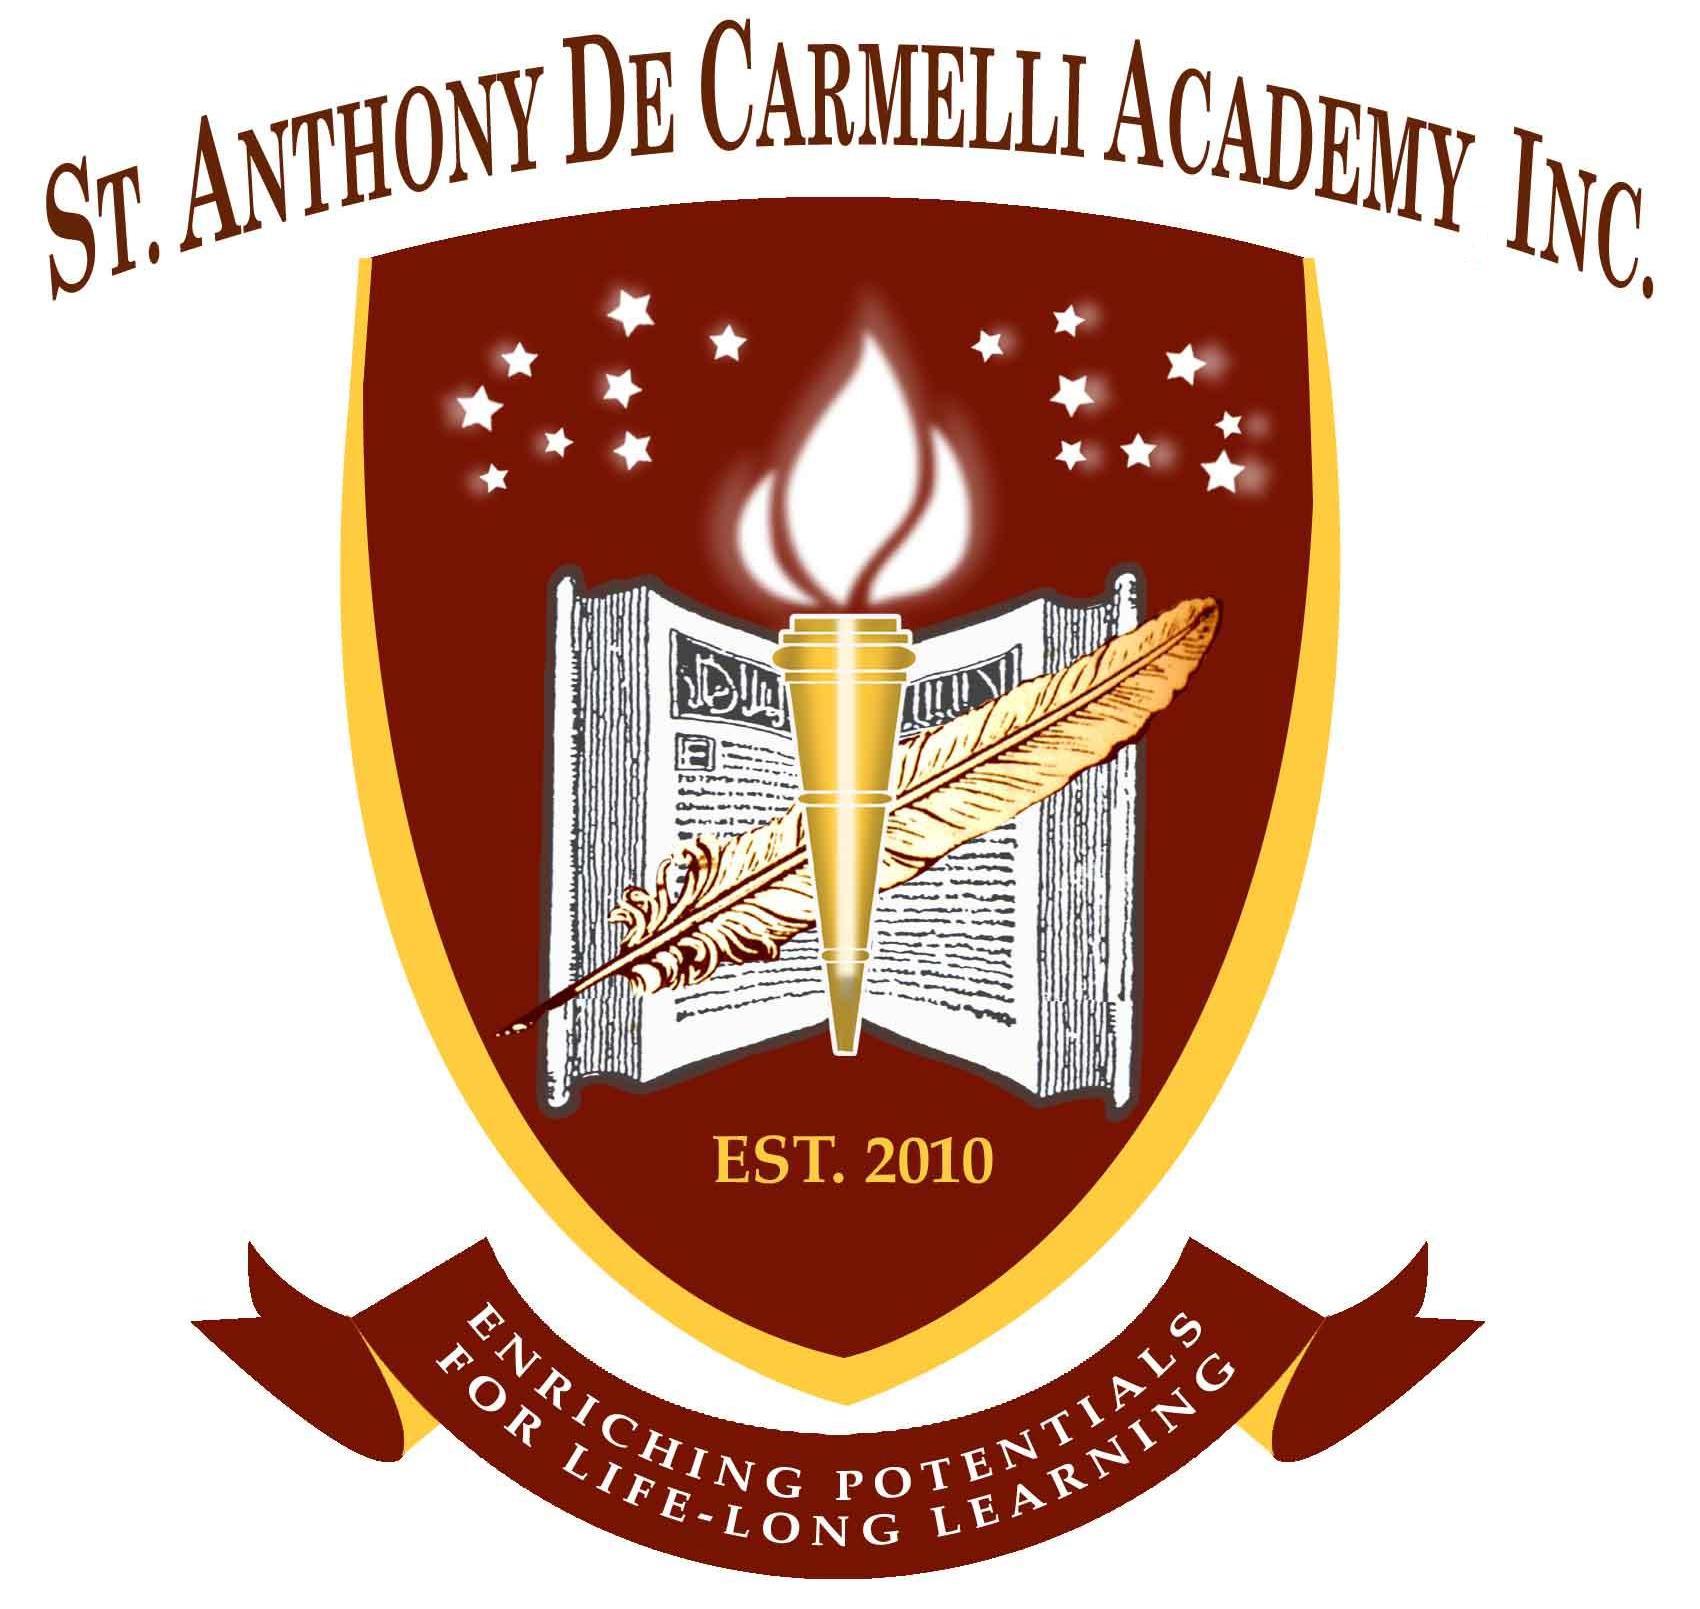 ST. ANTHONY DE CARMELLI ACADEMY INC